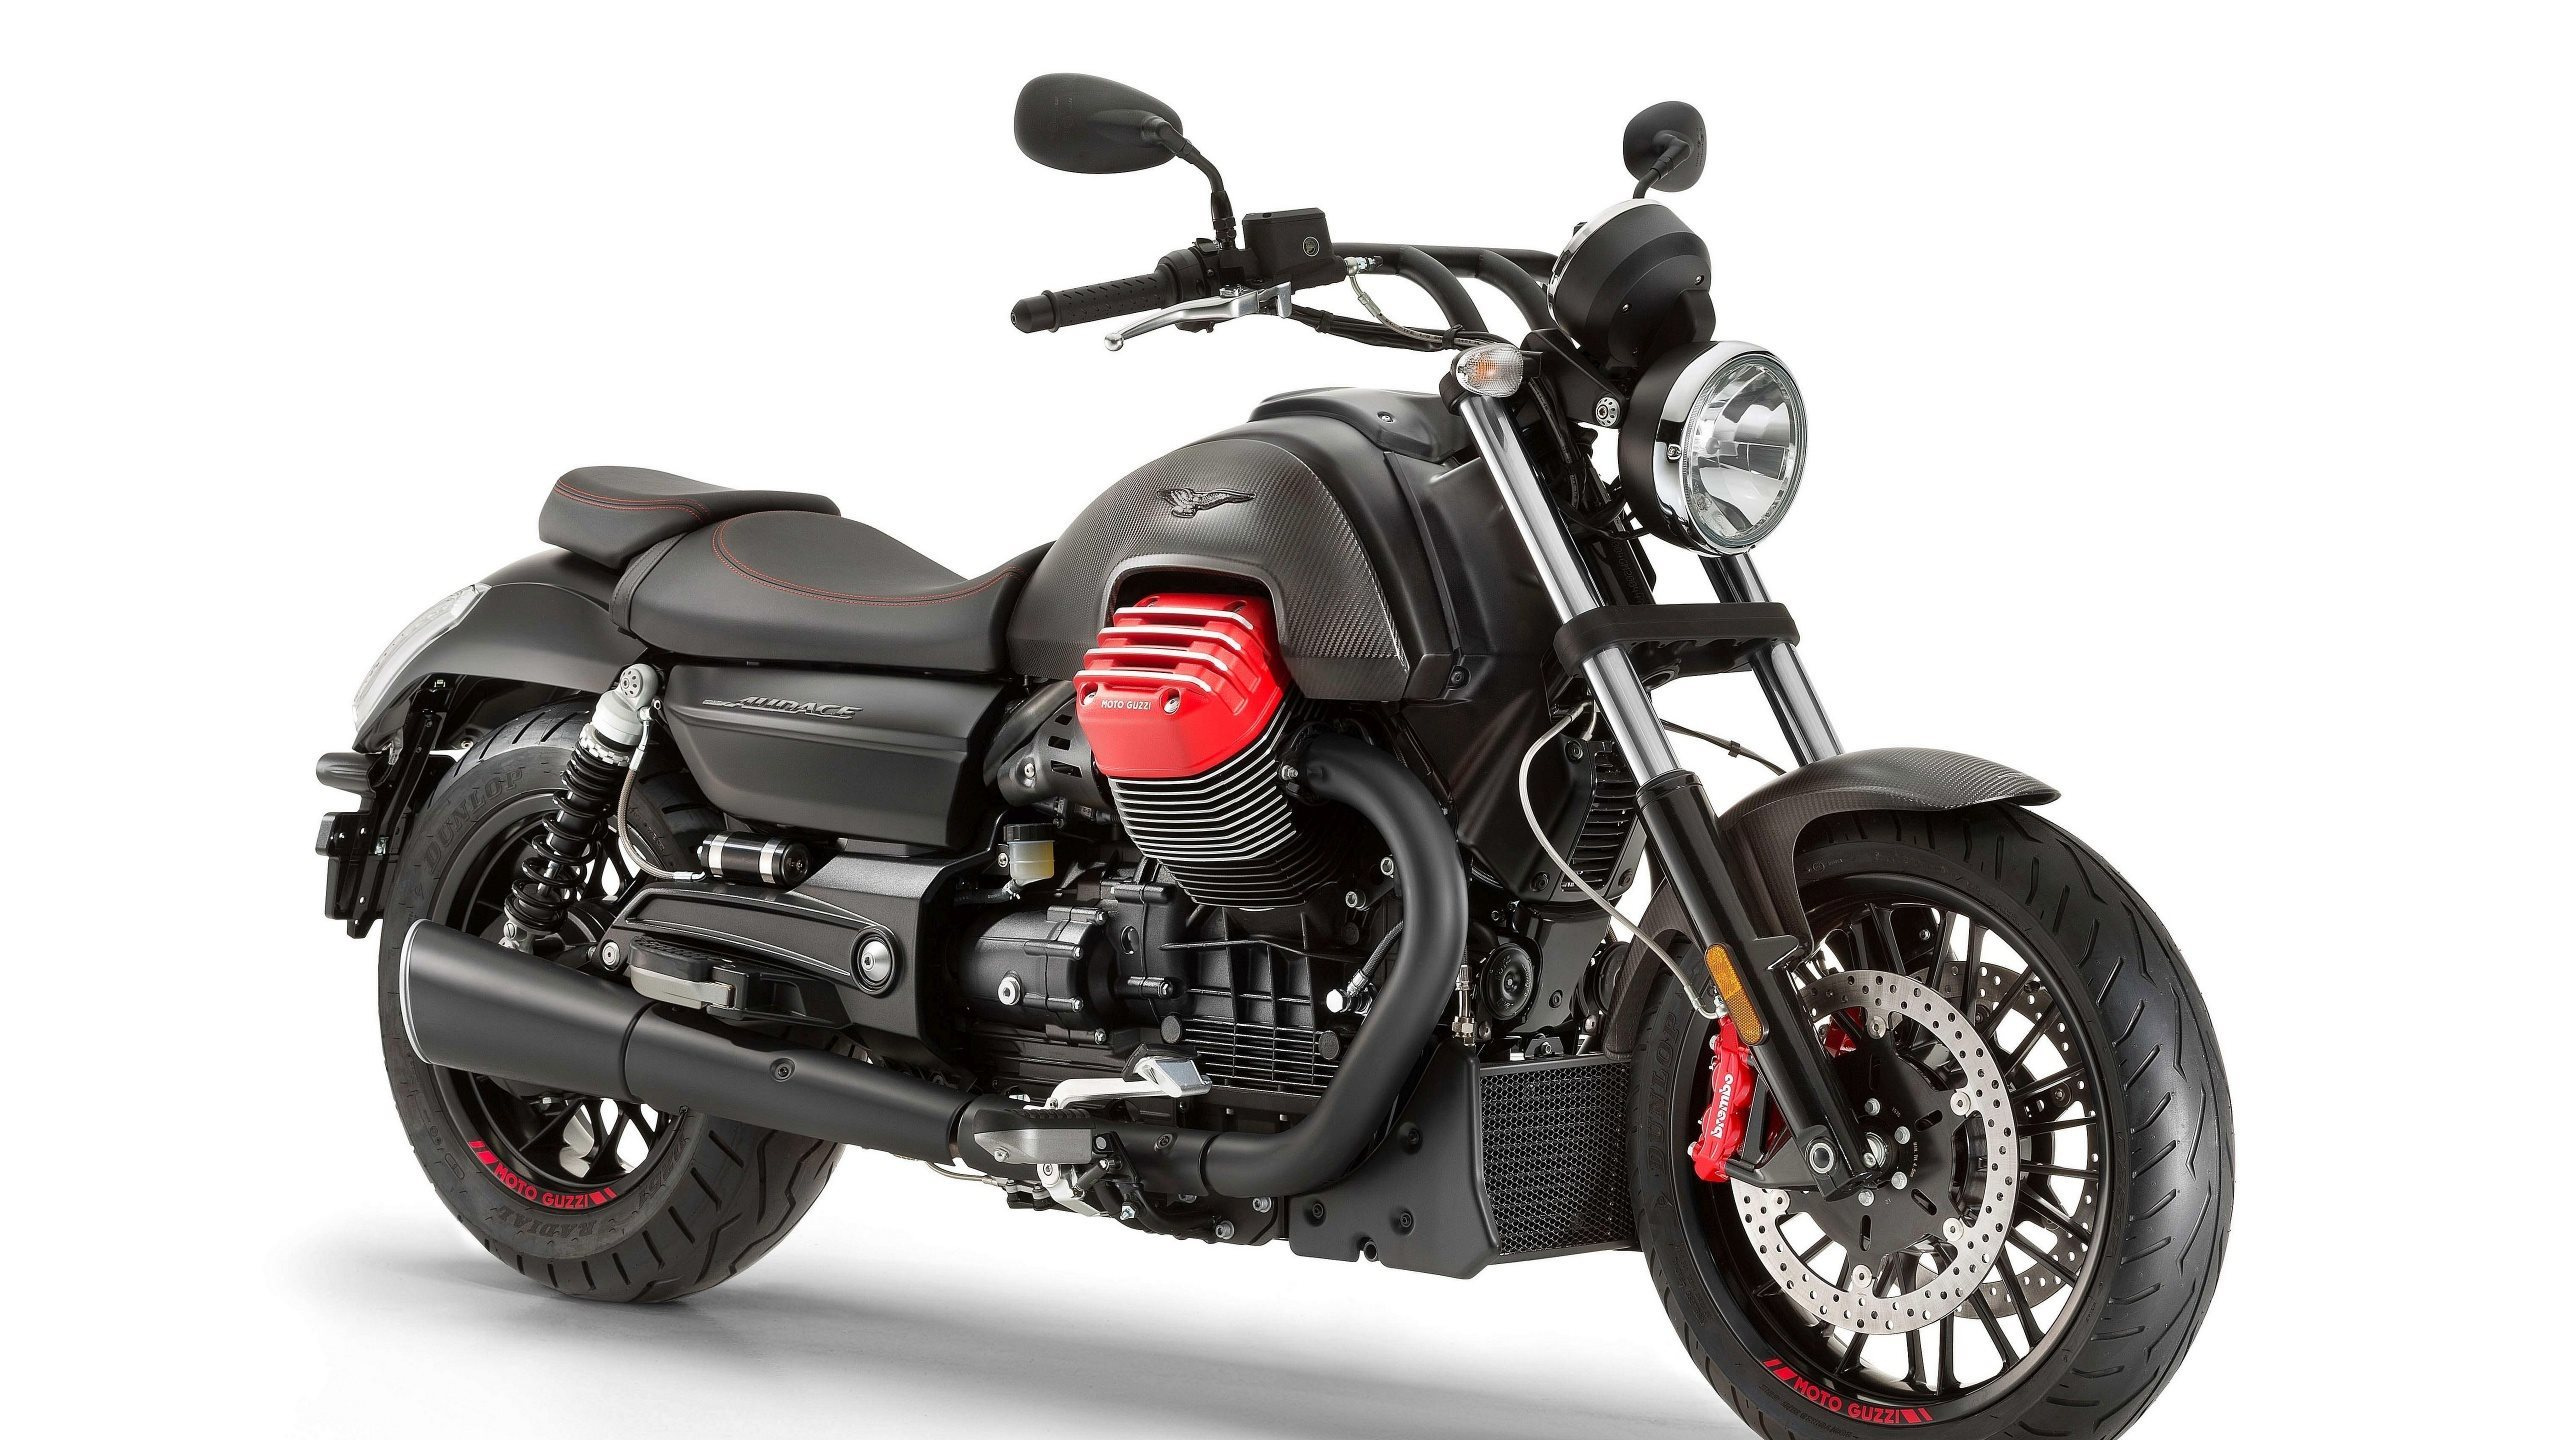 Motocicleta Cruiser Negra y Roja. Wallpaper in 2560x1440 Resolution